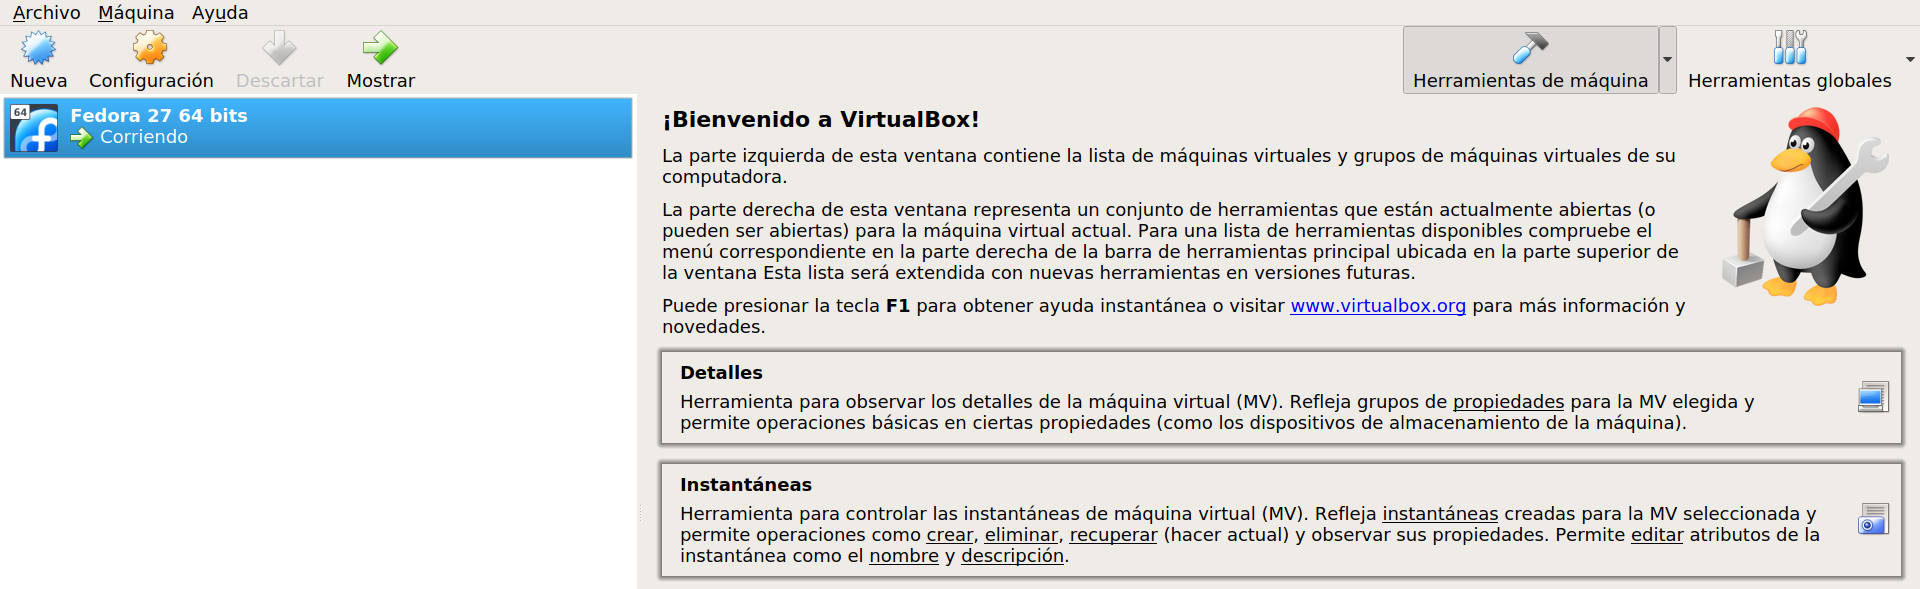 VirtualBox 5.2 en Ubuntu Xenial Xerus16.04 LTS